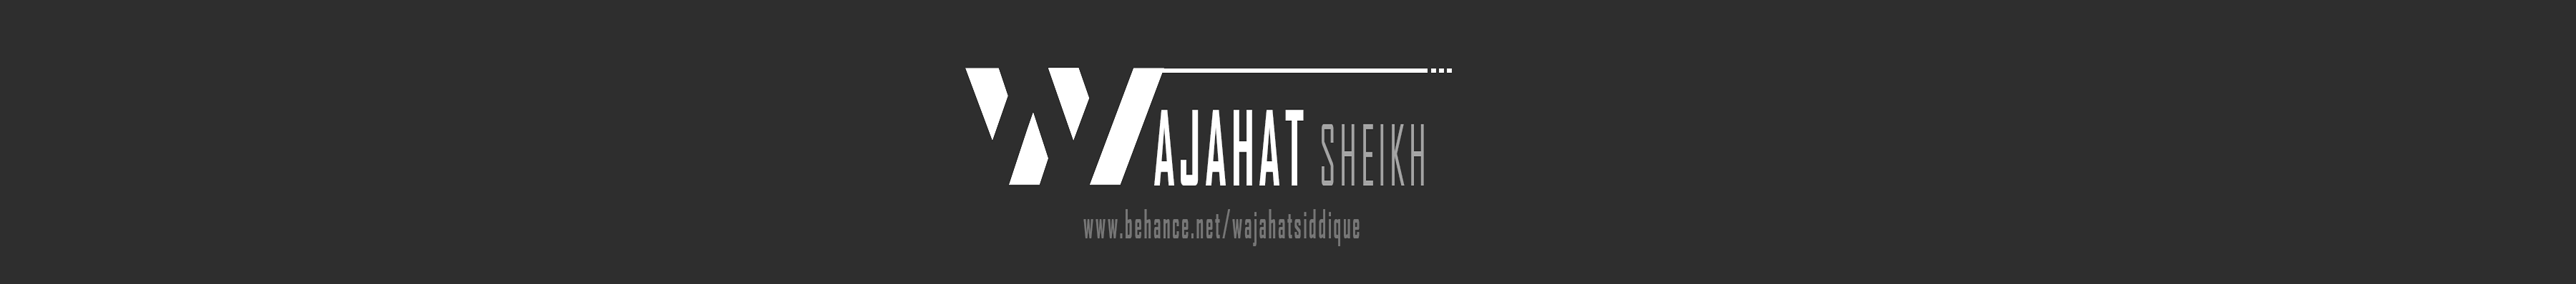 Wajahat Sheikh のプロファイルバナー